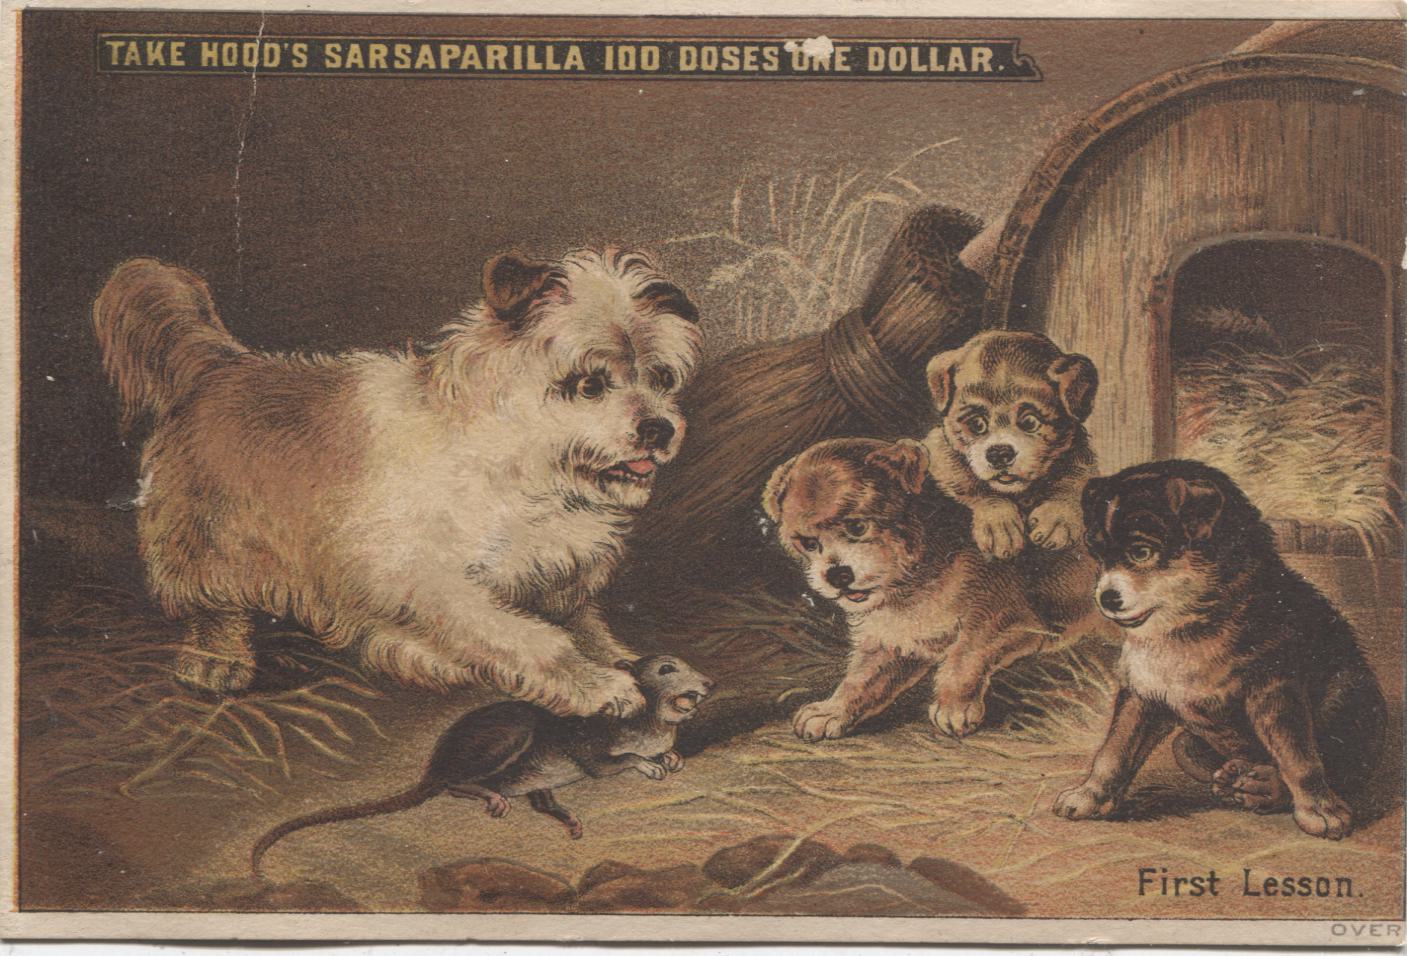 Hood's Sarsaparilla, French's North End Pharmacy Antique Trade Card, Brockton, MA - 3.25" x 4.75"